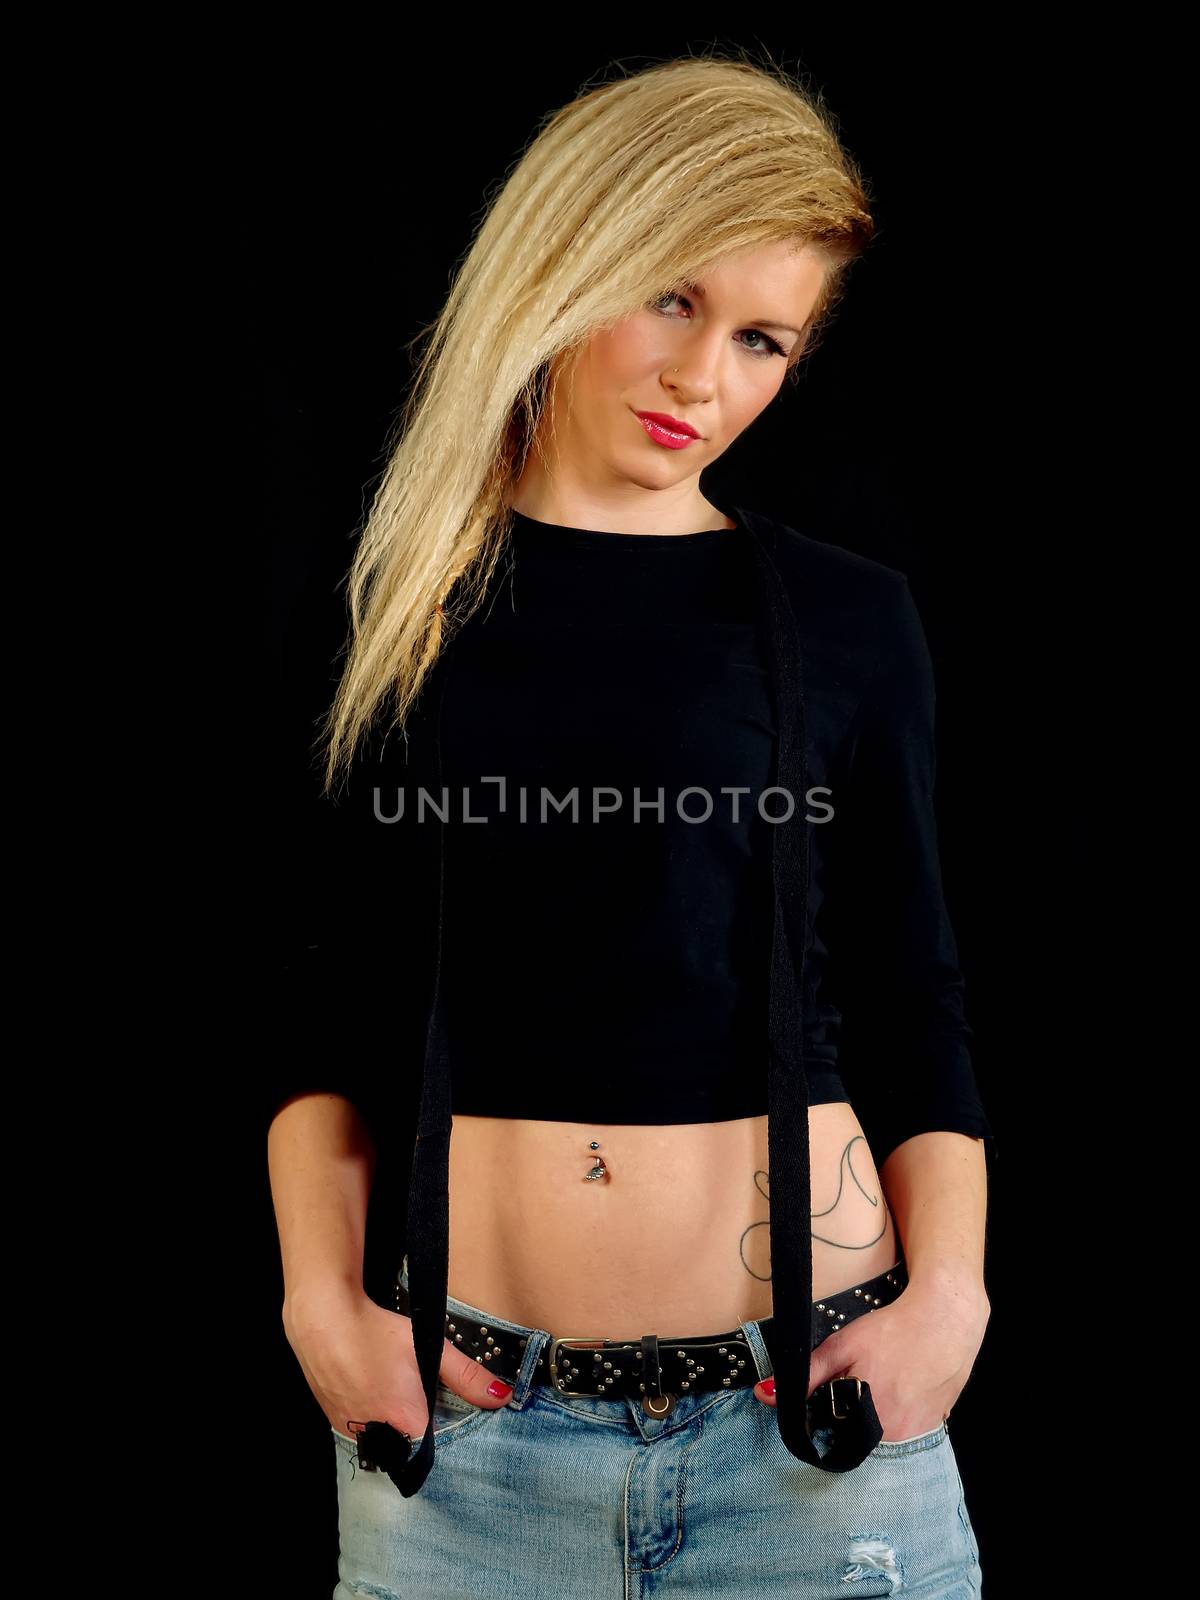 beautiful blonde woman wearing black shirt and jeans, posing